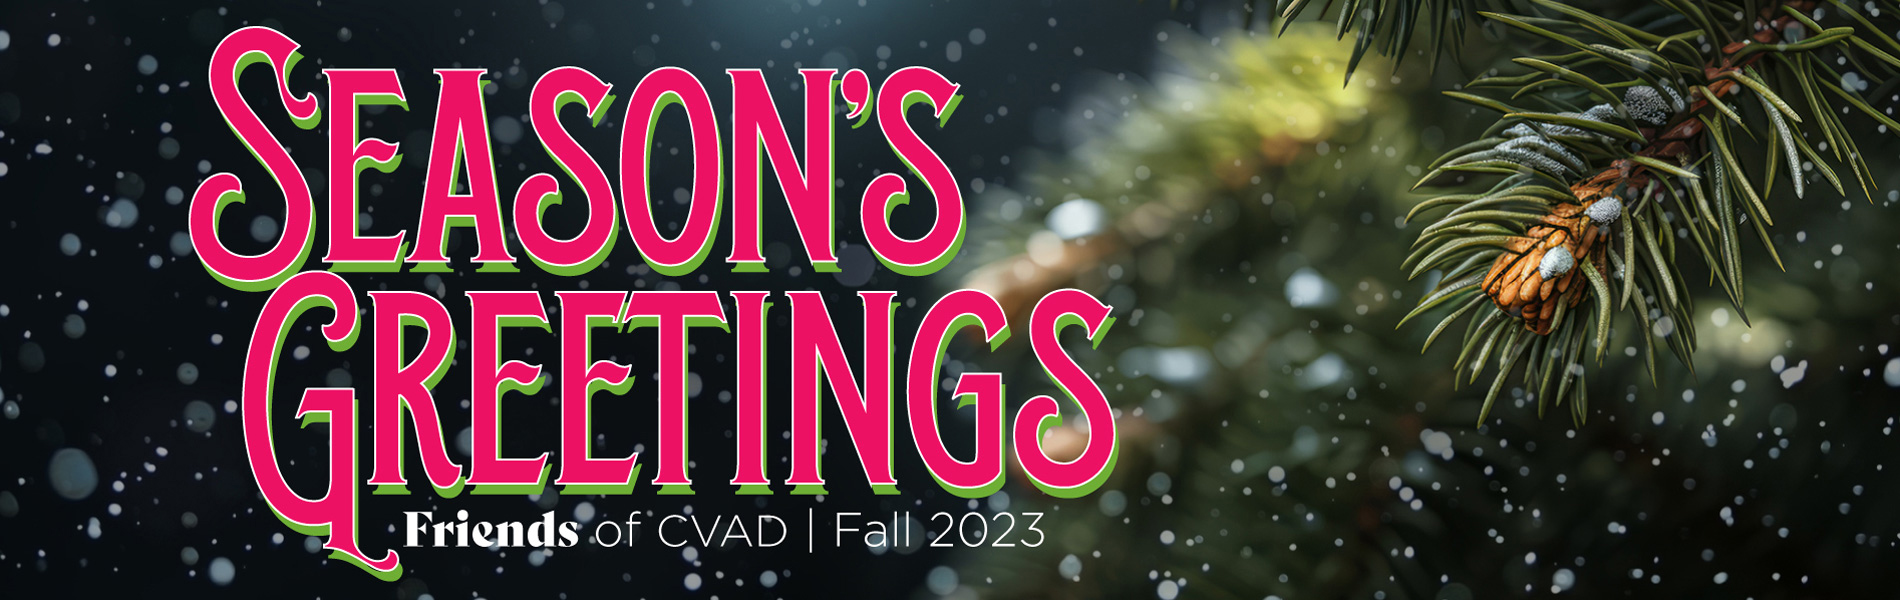 Season's Greetings Friends of CVAD Fall 2023